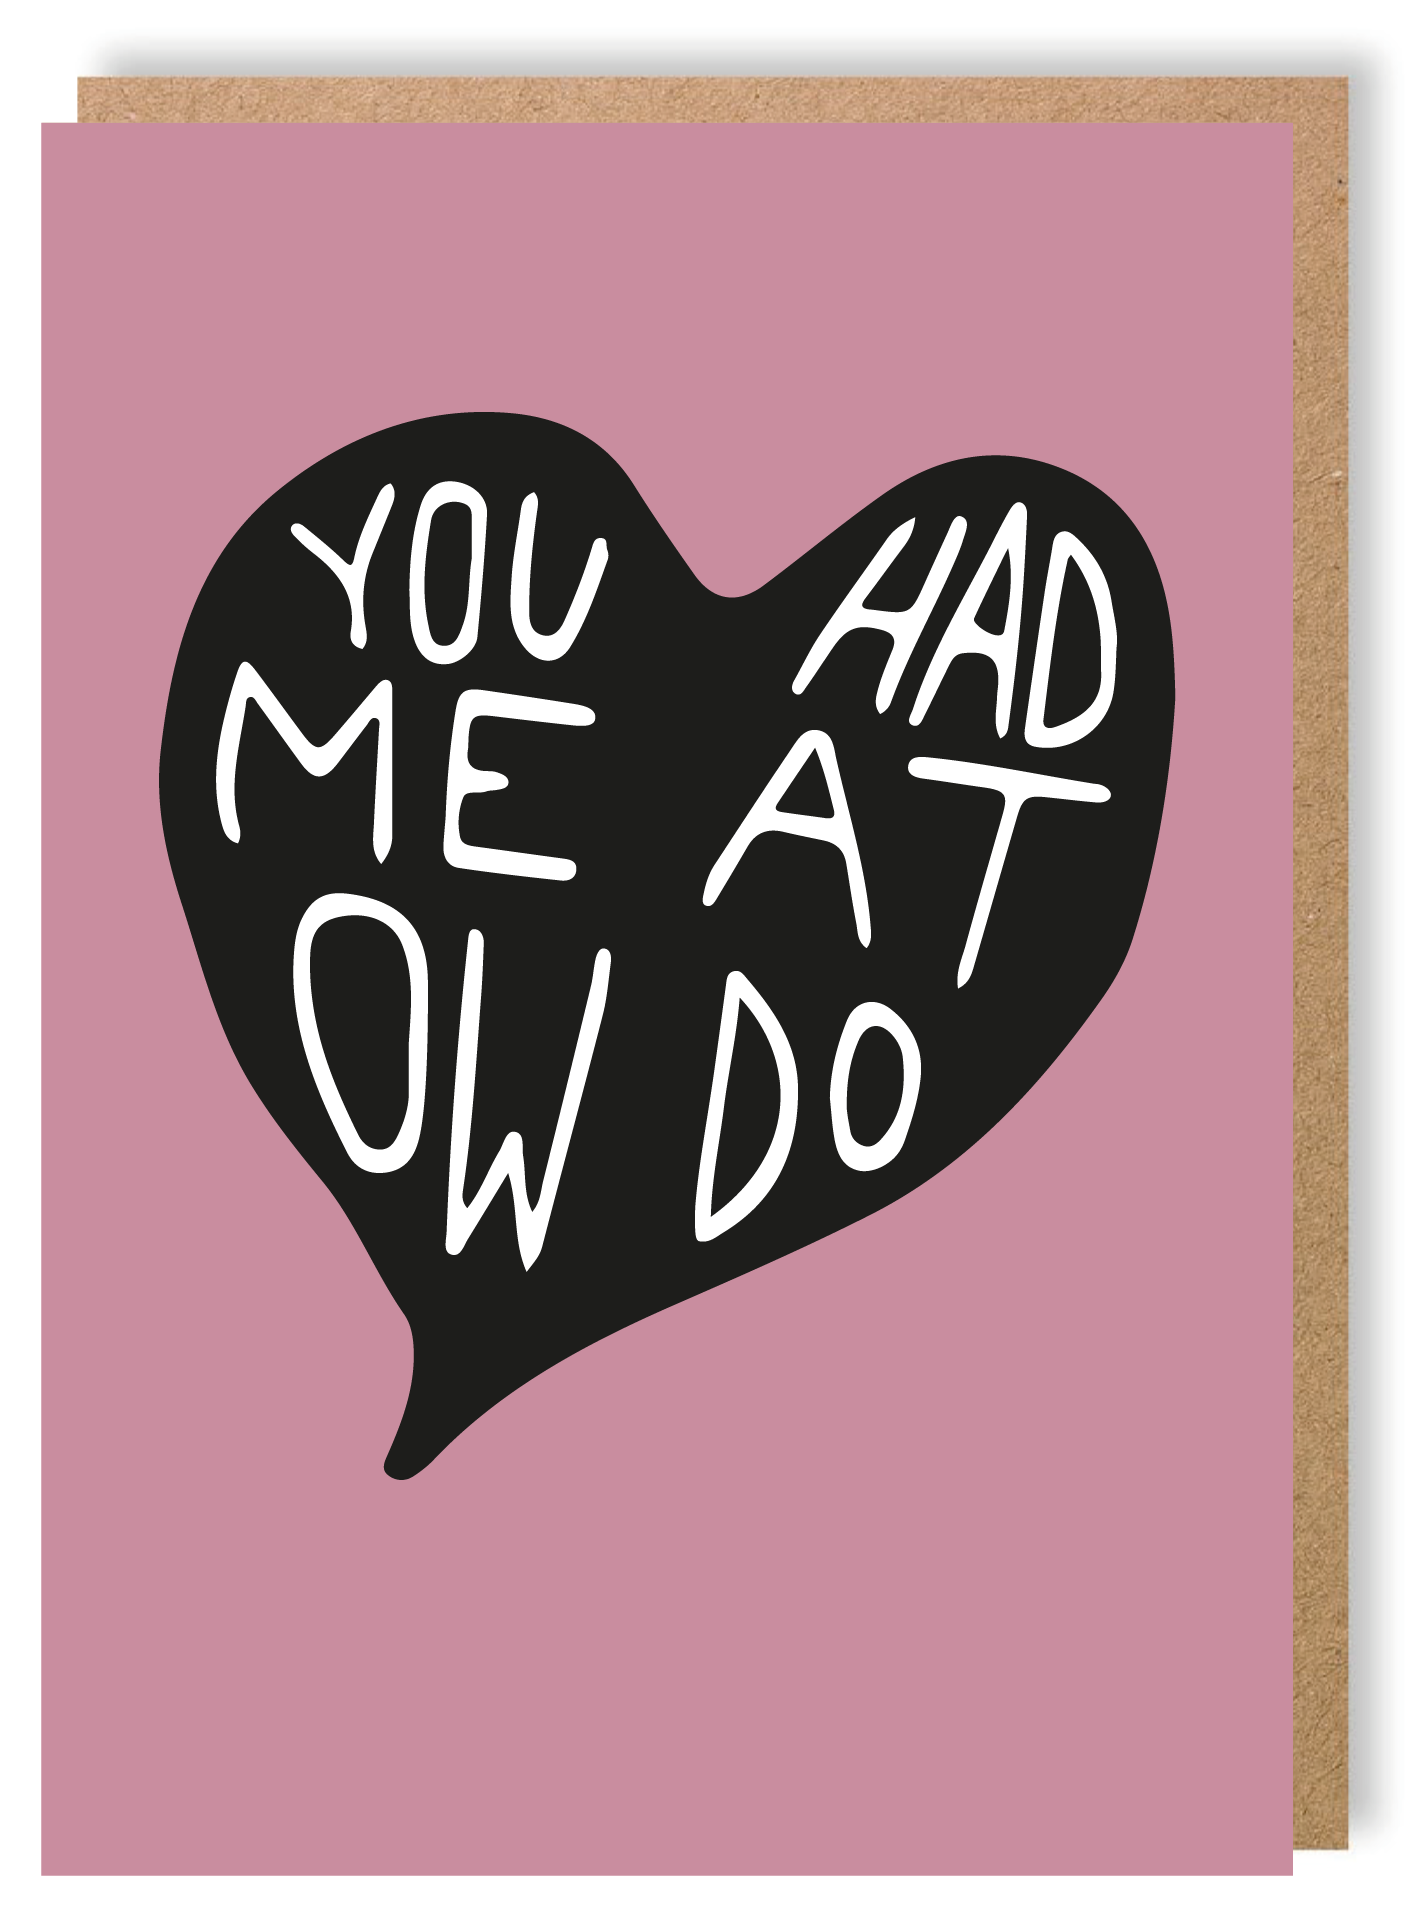 You Had Me At Ow Do - Greetings Card - LukeHorton Art